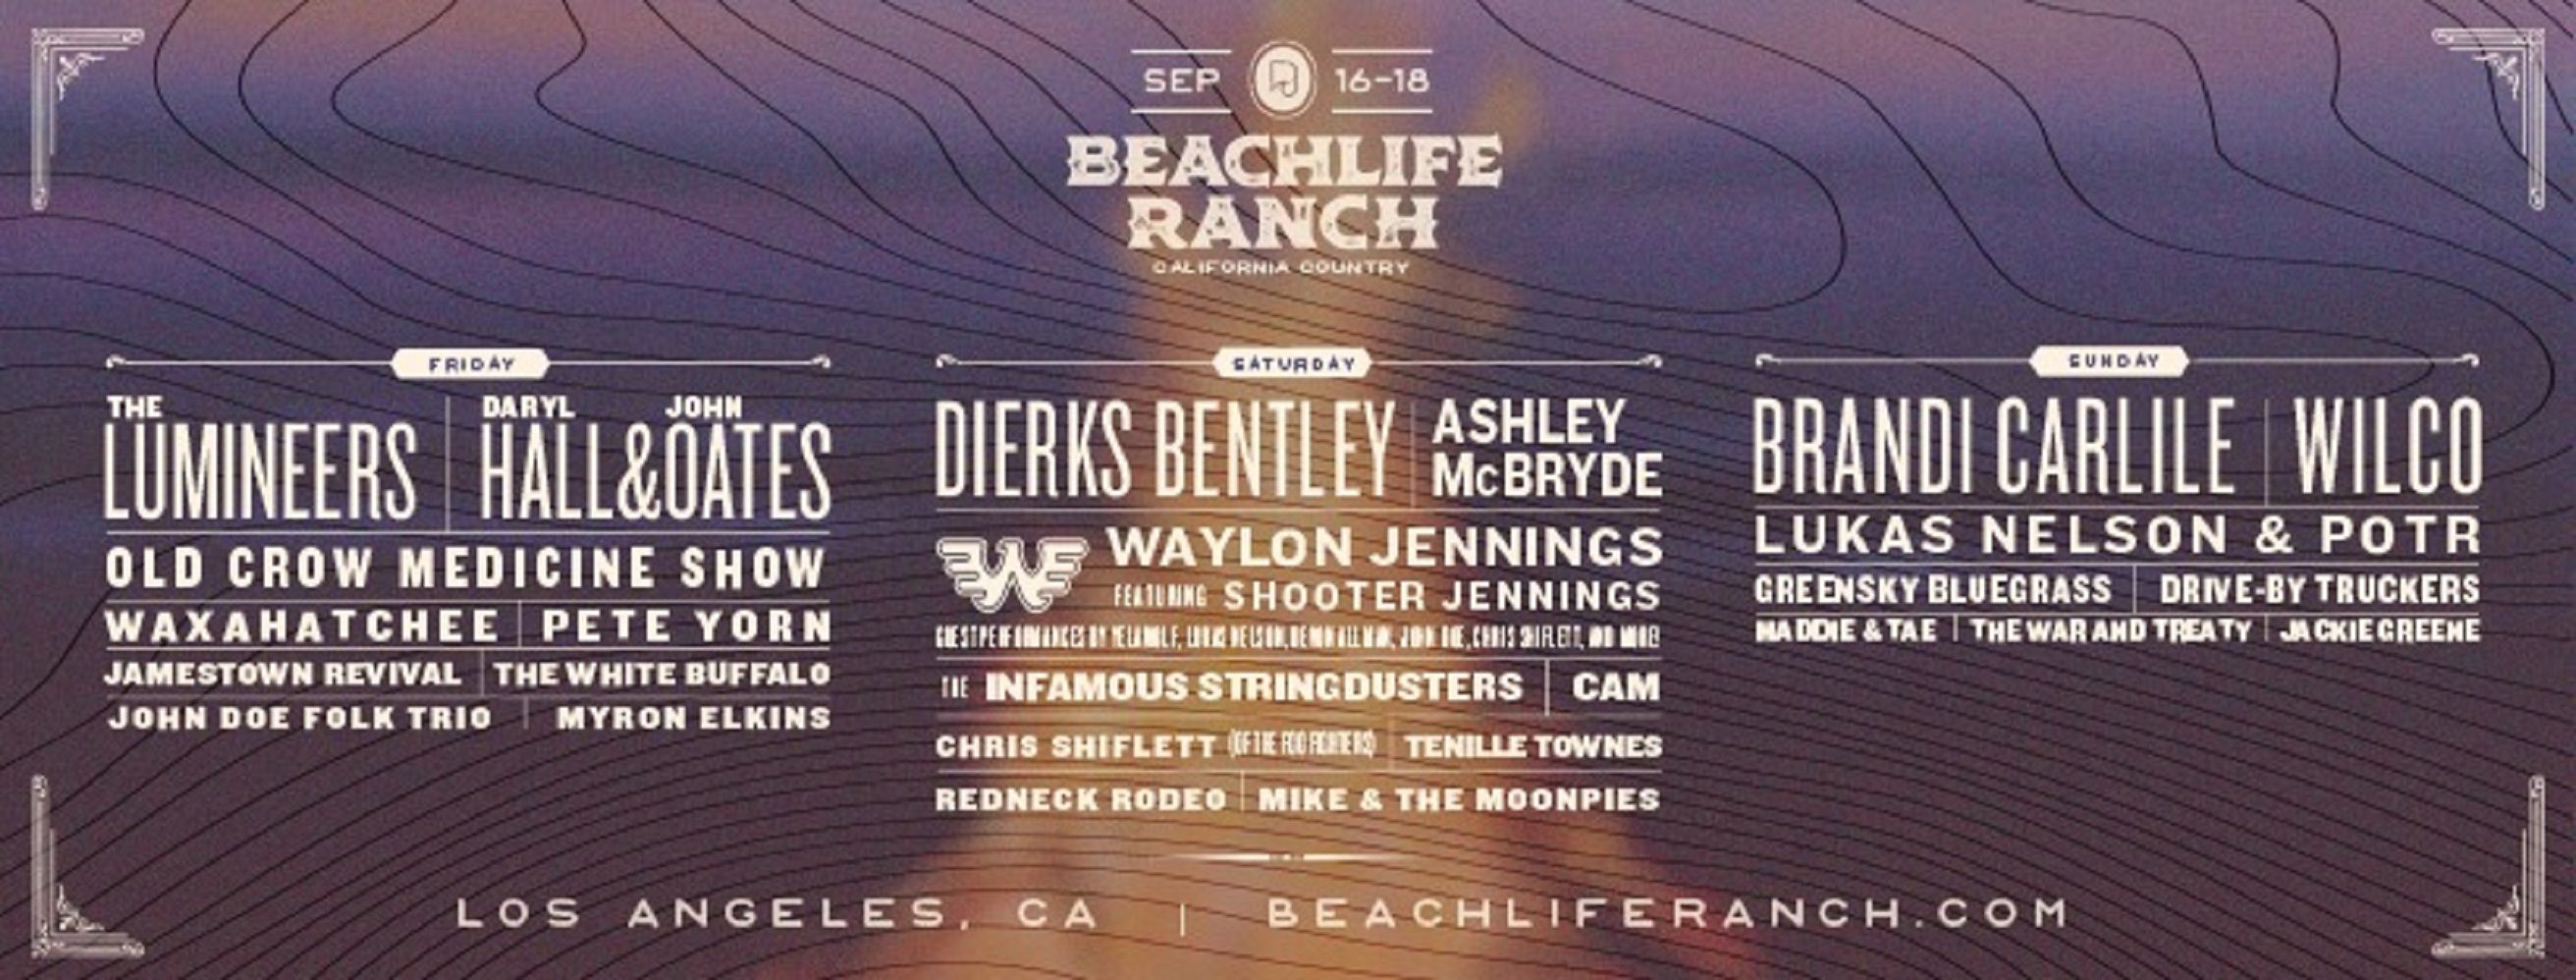 Chris Shiflett (Foo Fighters), Cam & Redneck Rodeo Added To BeachLife Ranch Sept. 16-18